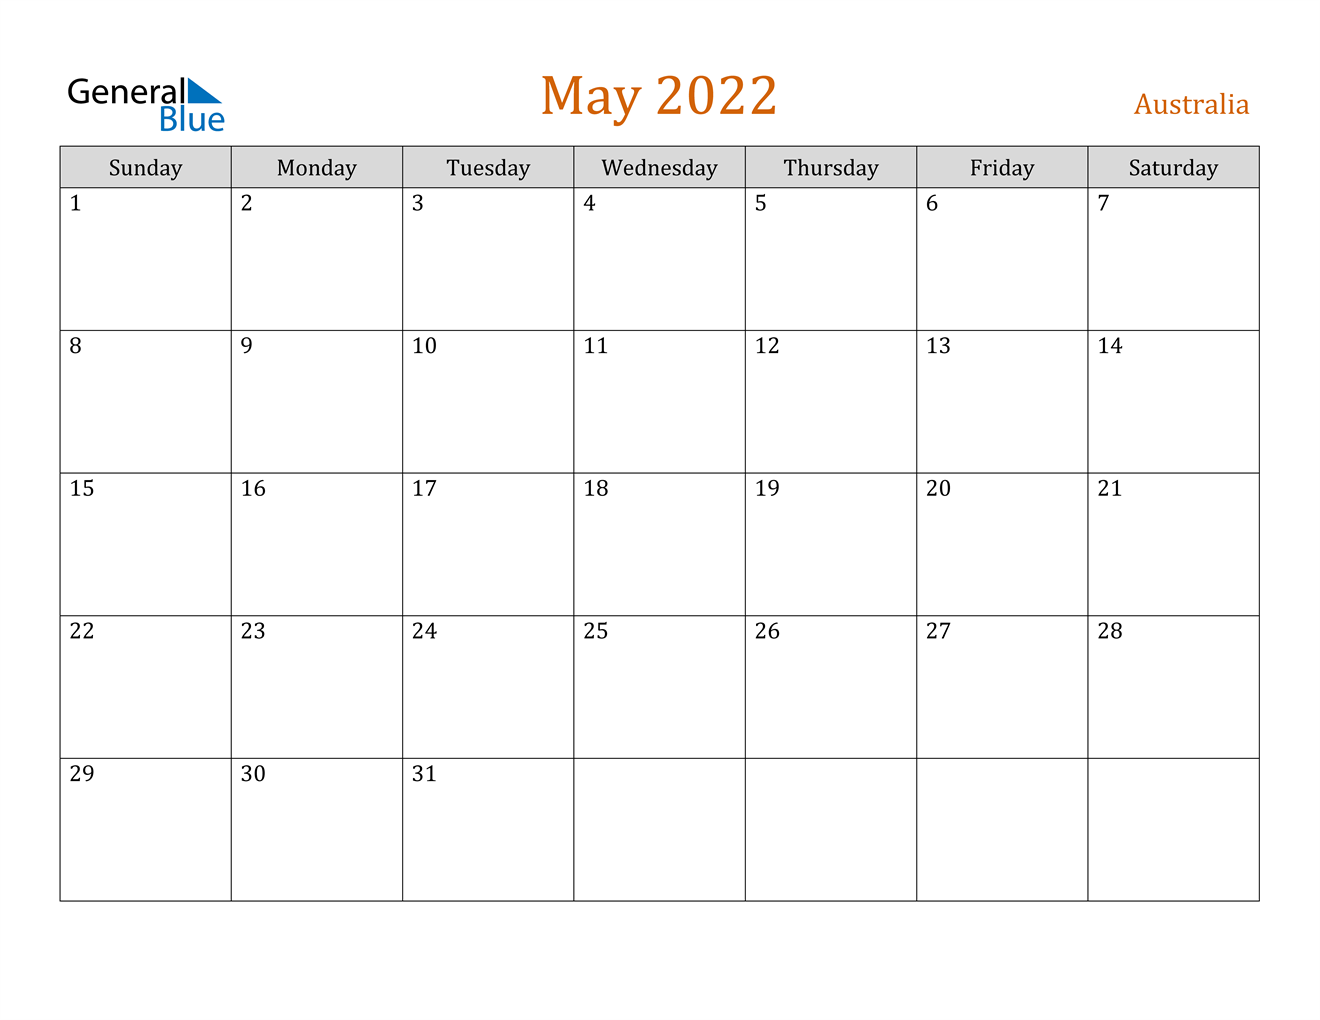 May 2022 Calendar - Australia